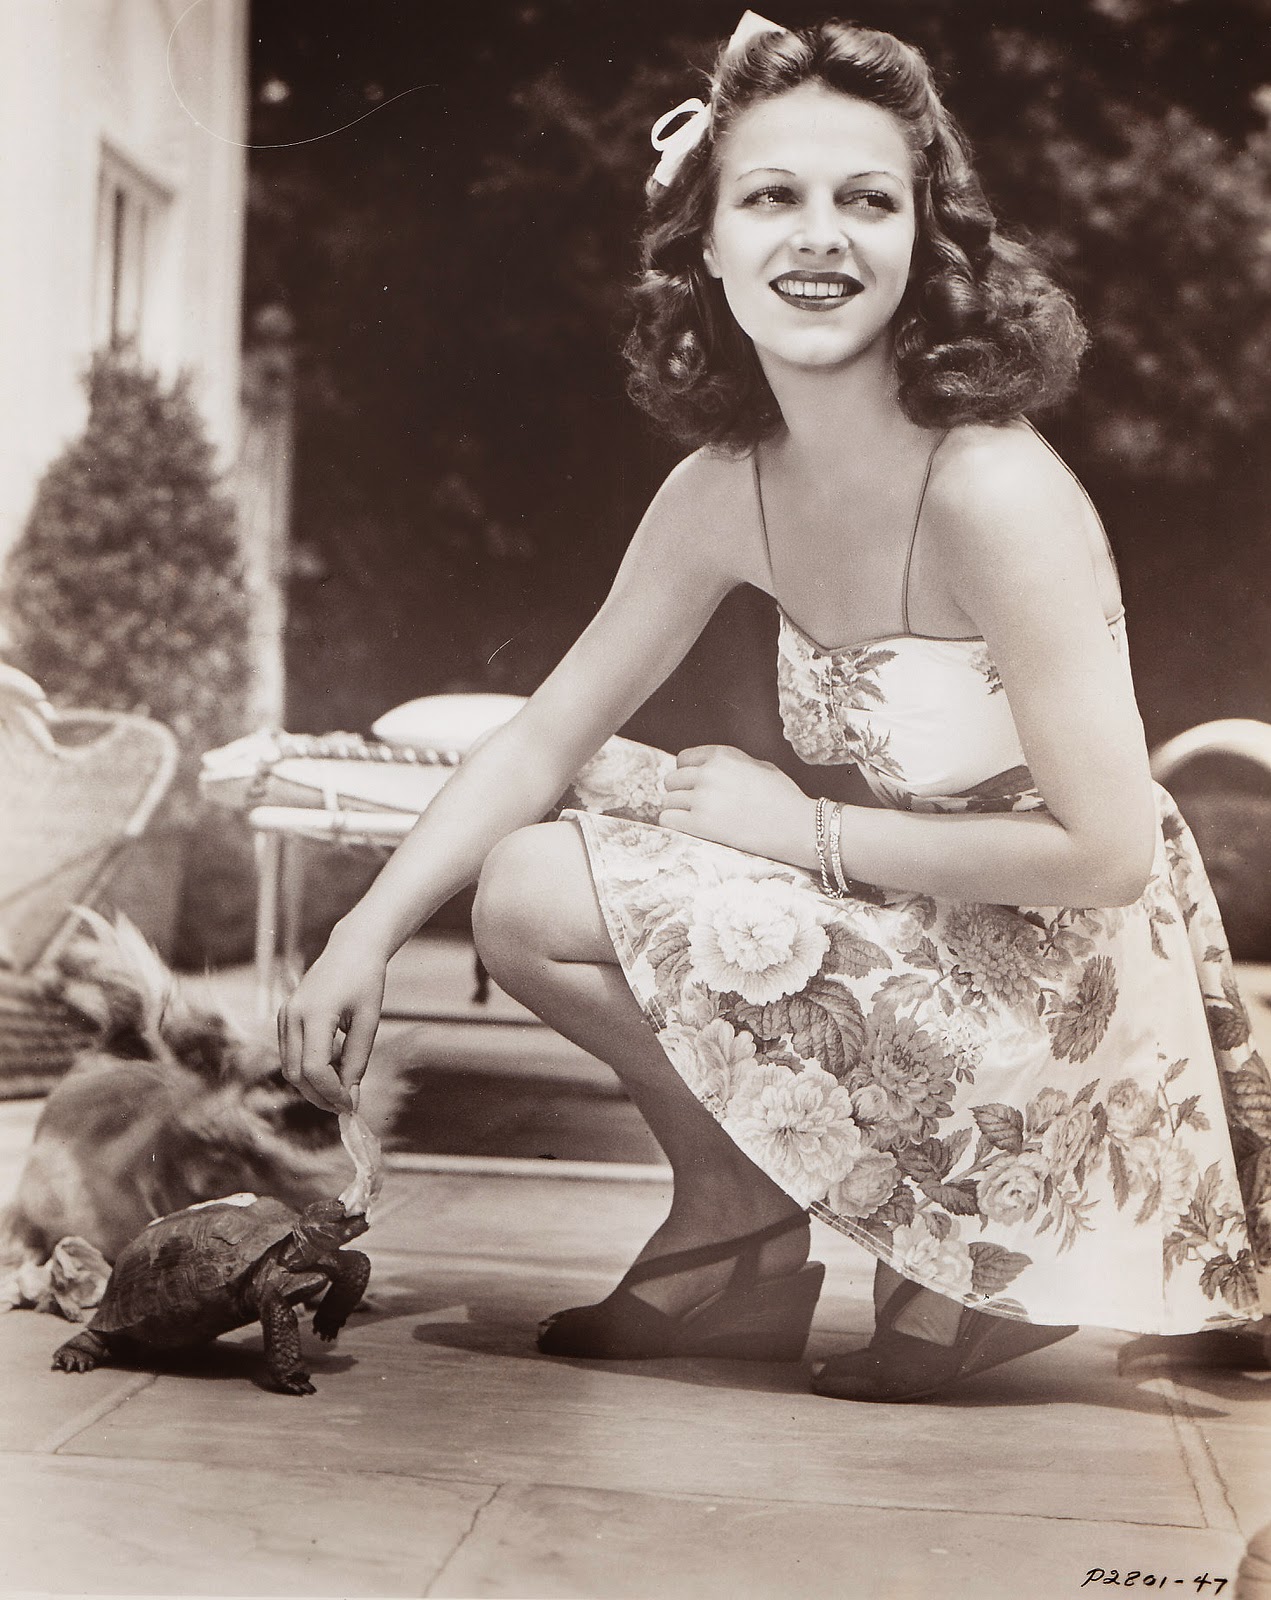 Amazing Historical Photo of Vera Zorina in 1941 